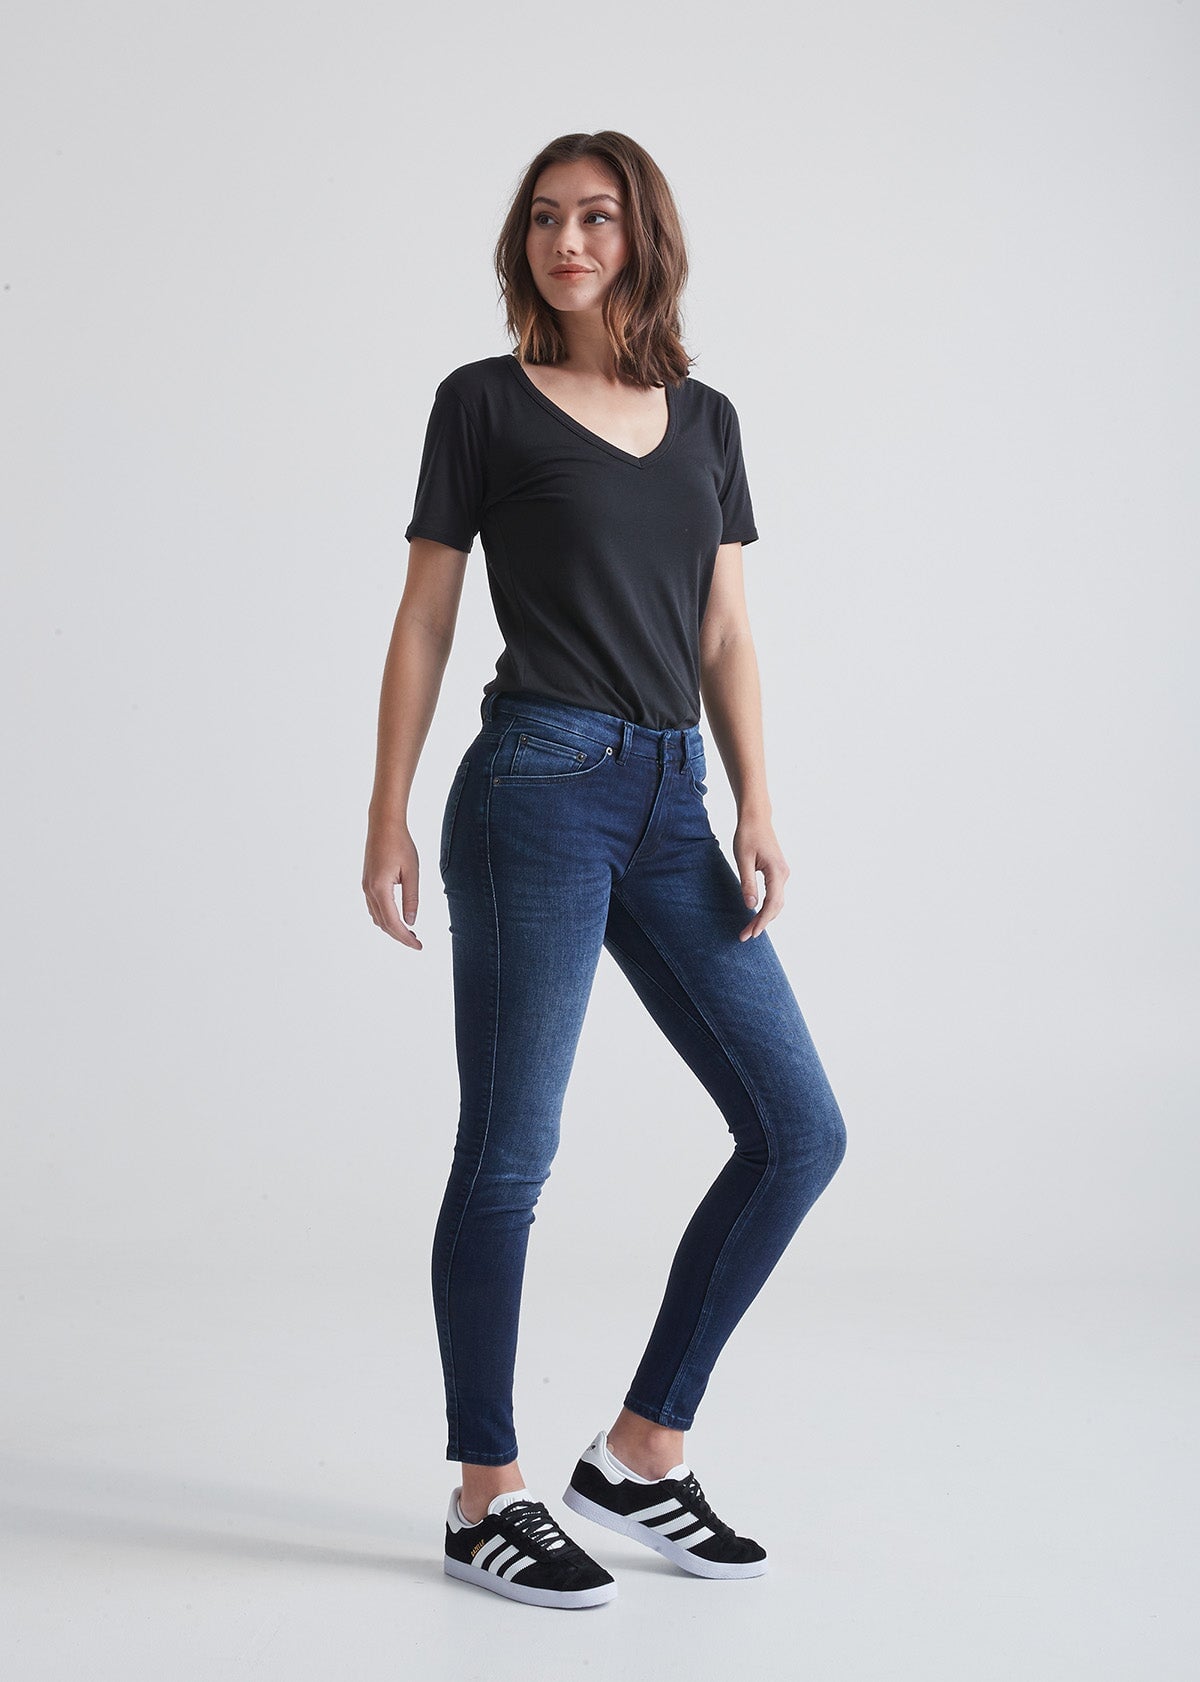 Women's Stretch Jeans: Shop Women's Stretchy Jeans